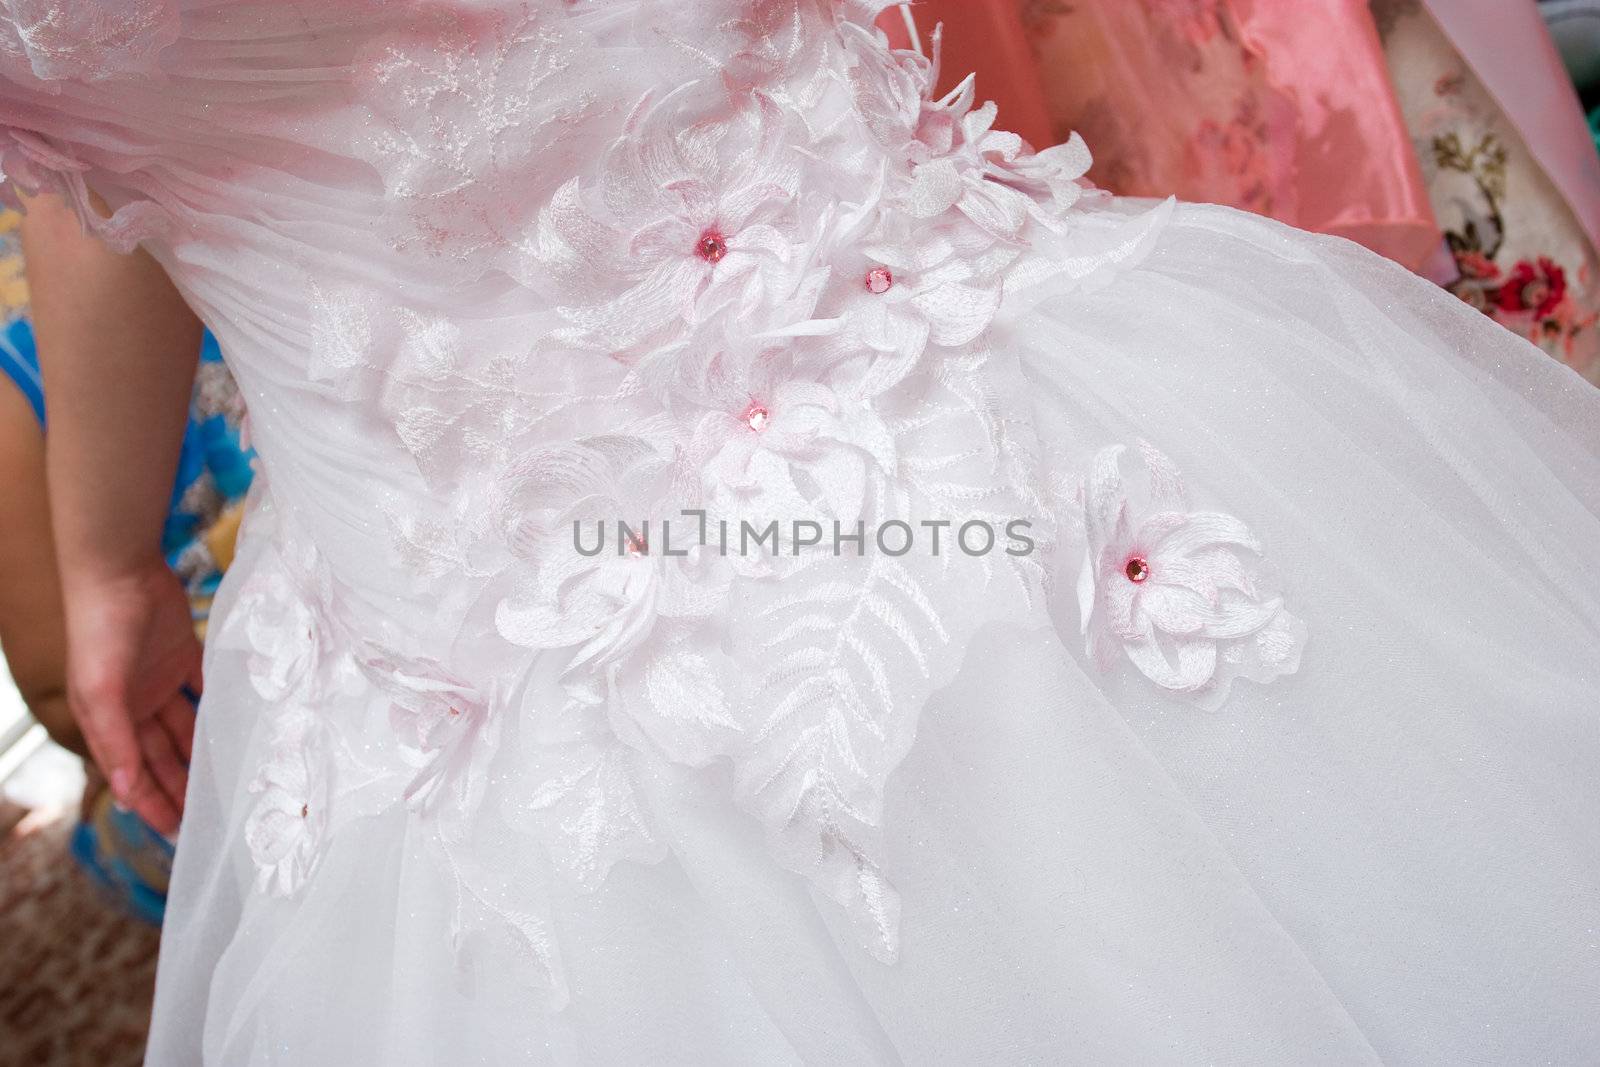 flowers on the wedding dress by vsurkov